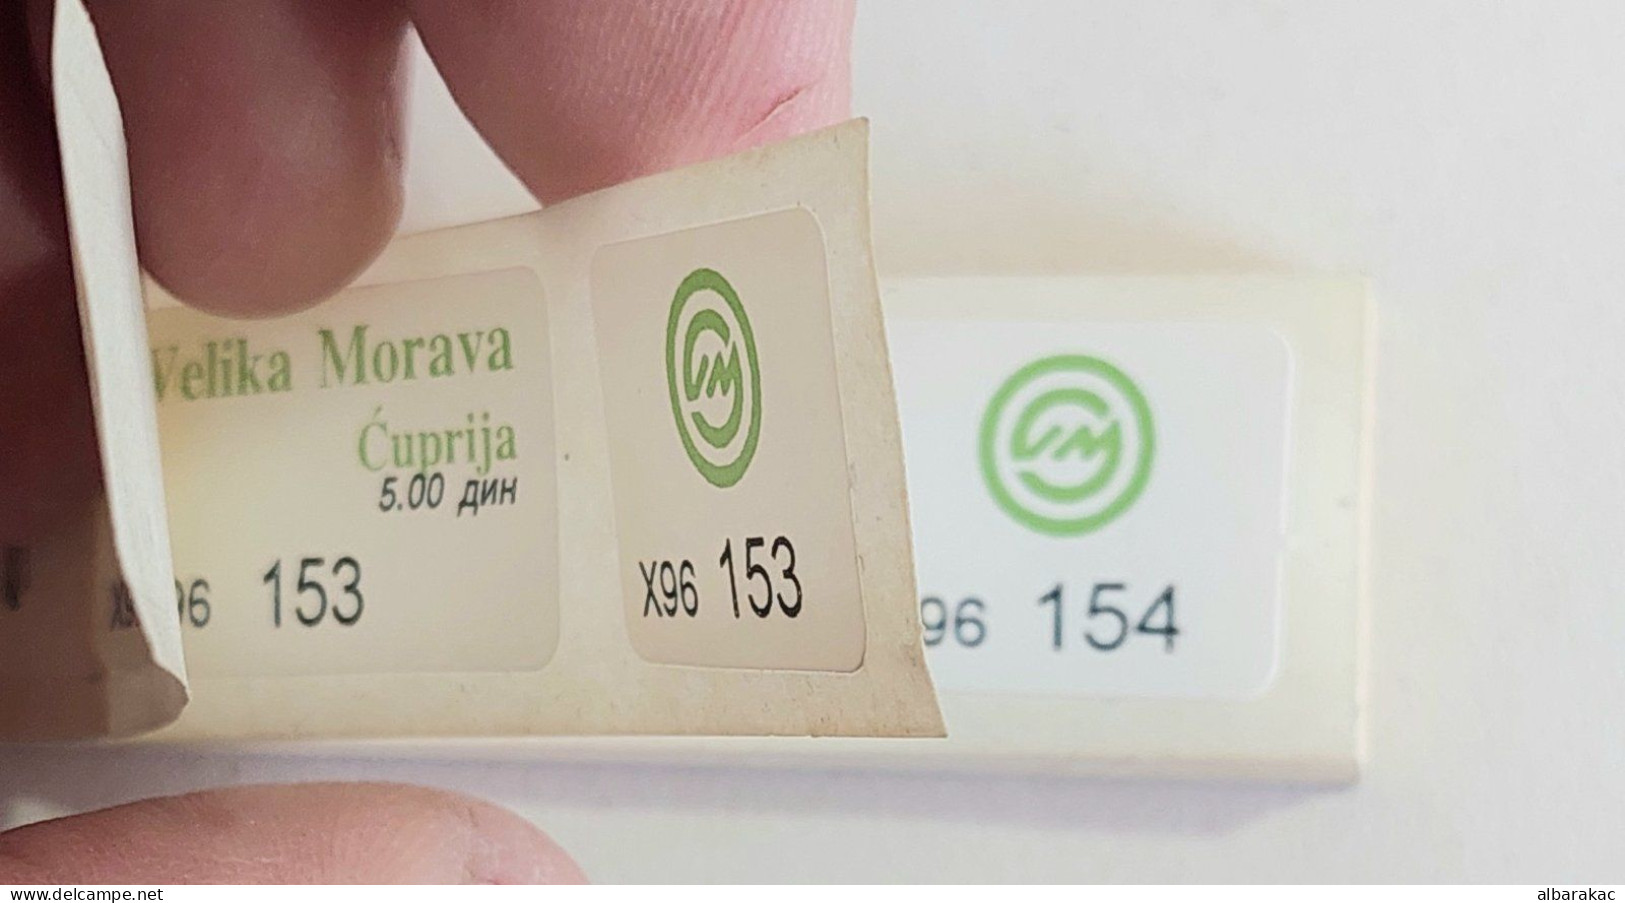 Yugoslavia -  BUS Cuprija Velika Morava - Additional Tickets For Passenger Luggage - Europe